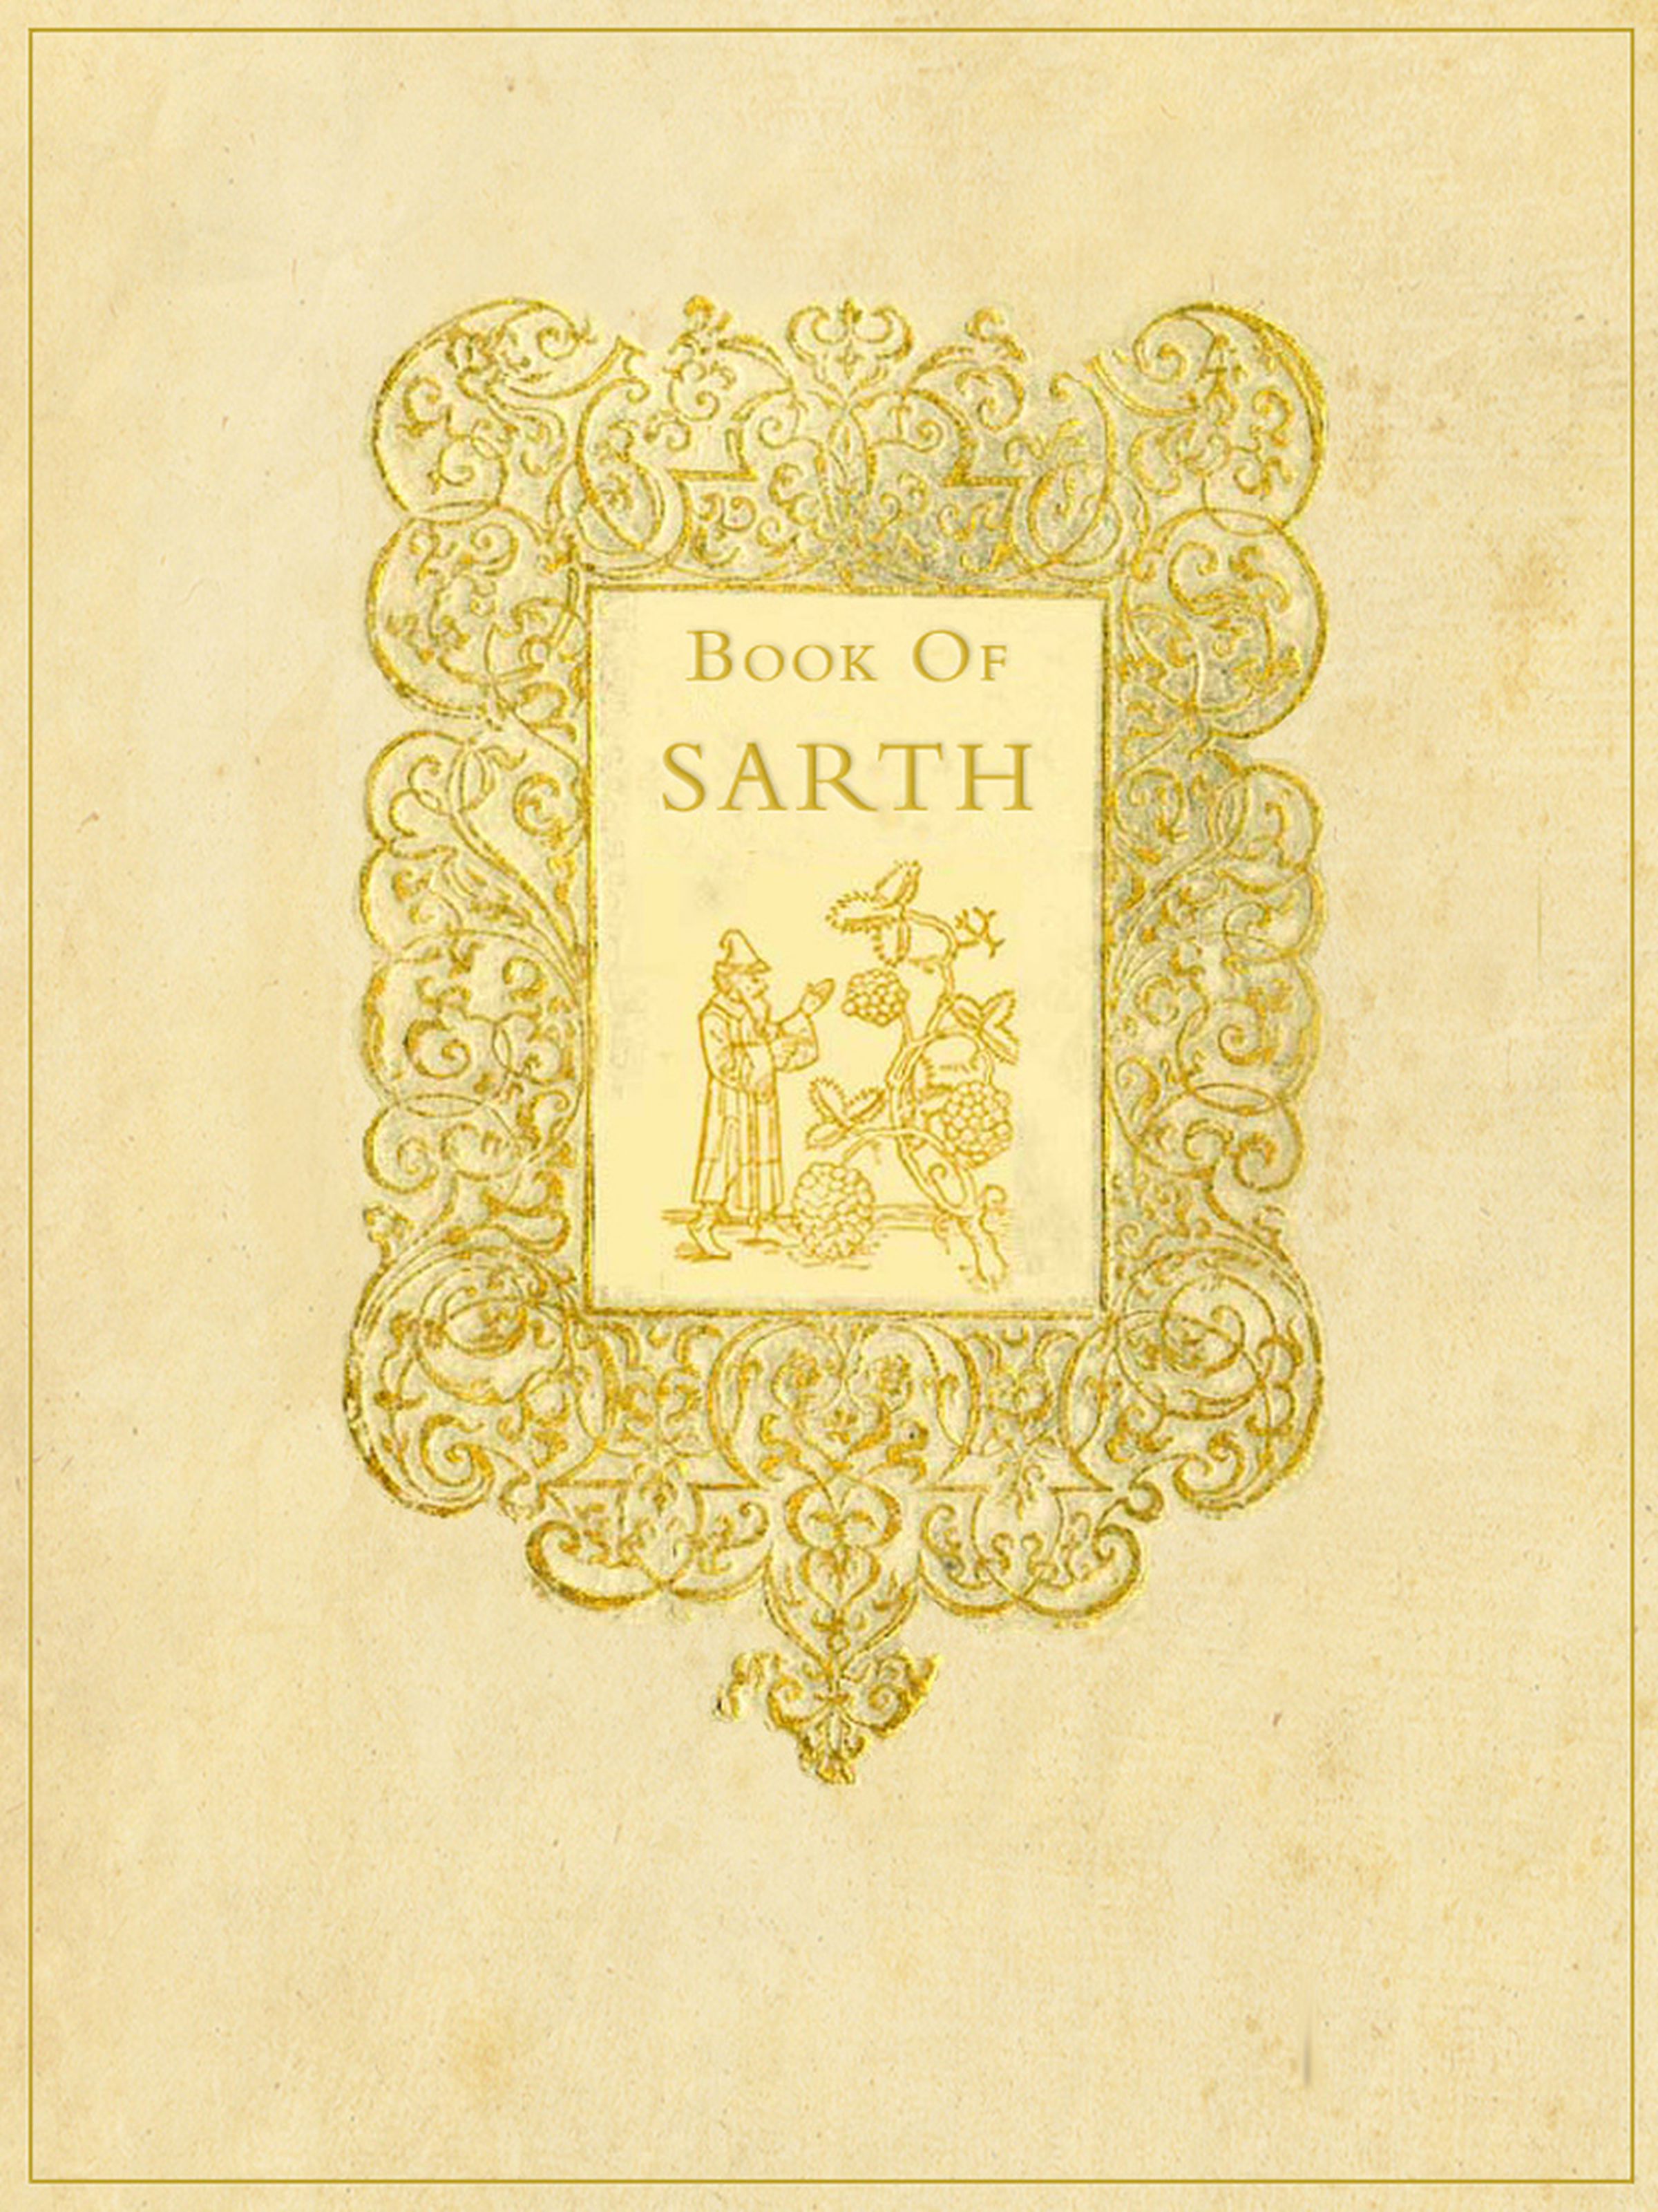 'The Book of Sarth' screenshots